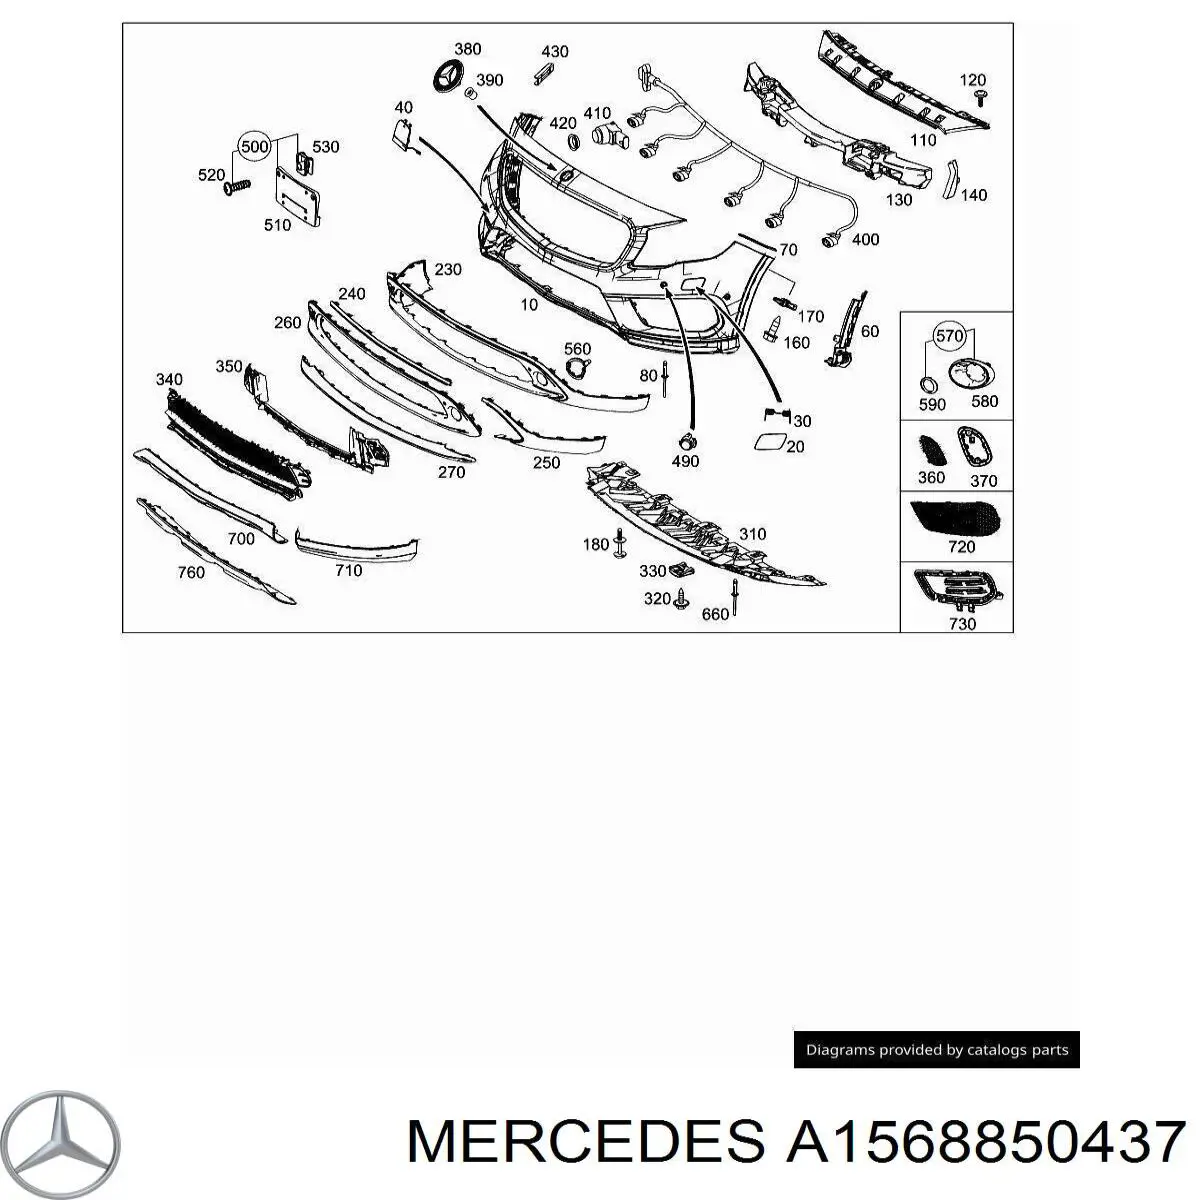 A1568850437 Mercedes 